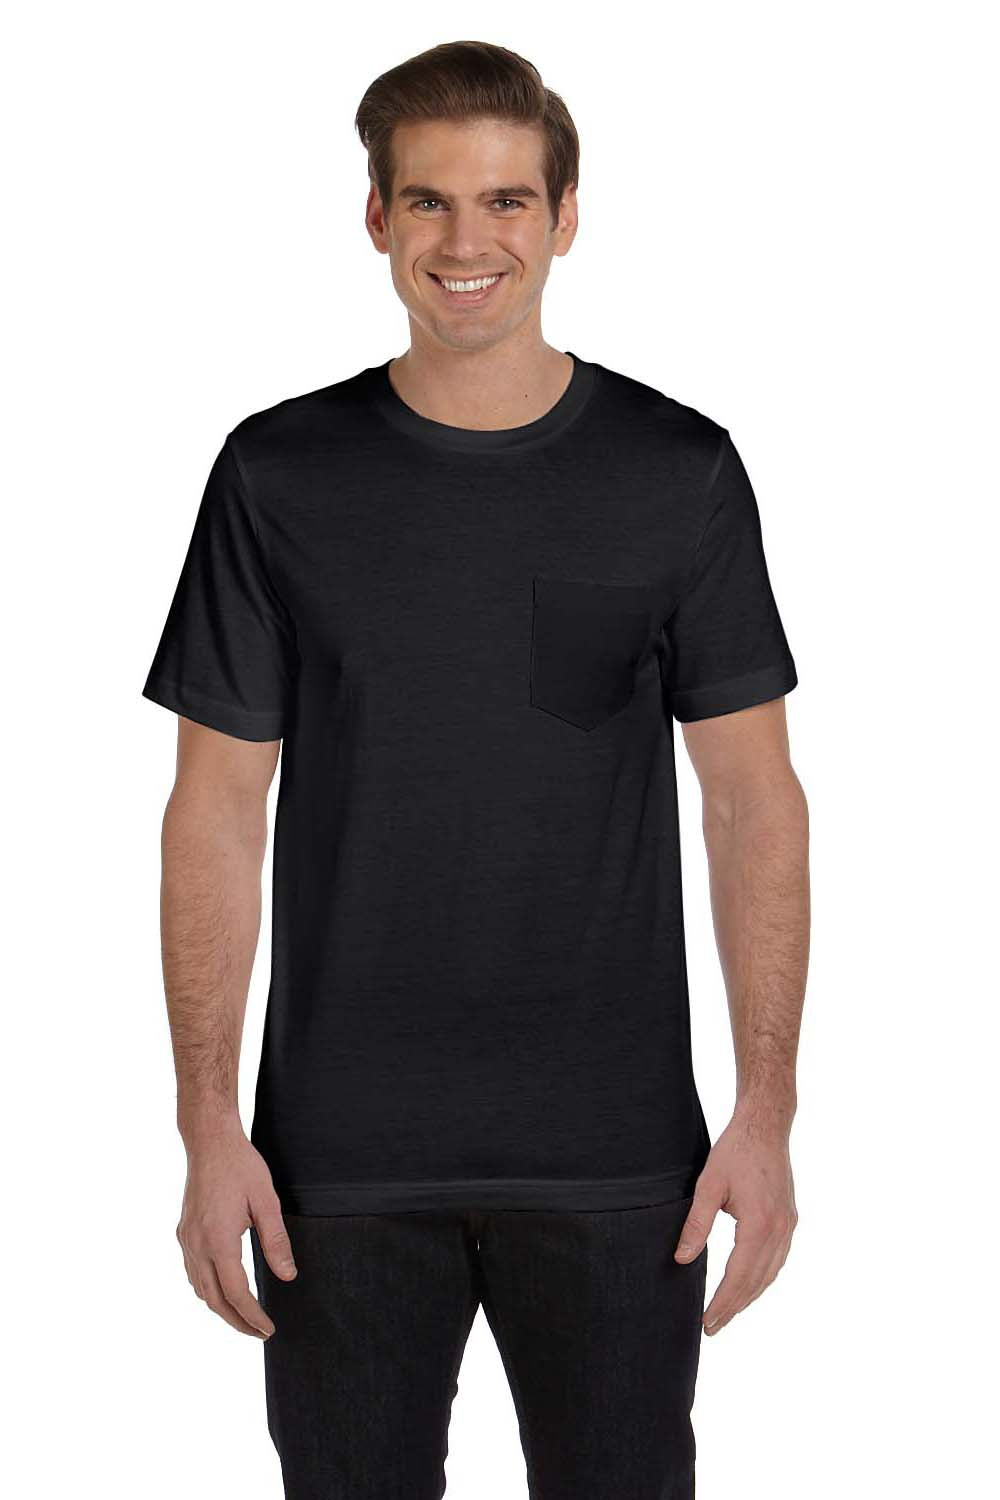 Bella + Canvas 3021 Mens Jersey Short Sleeve Crewneck T-Shirt w/ Pocket Black Model Front